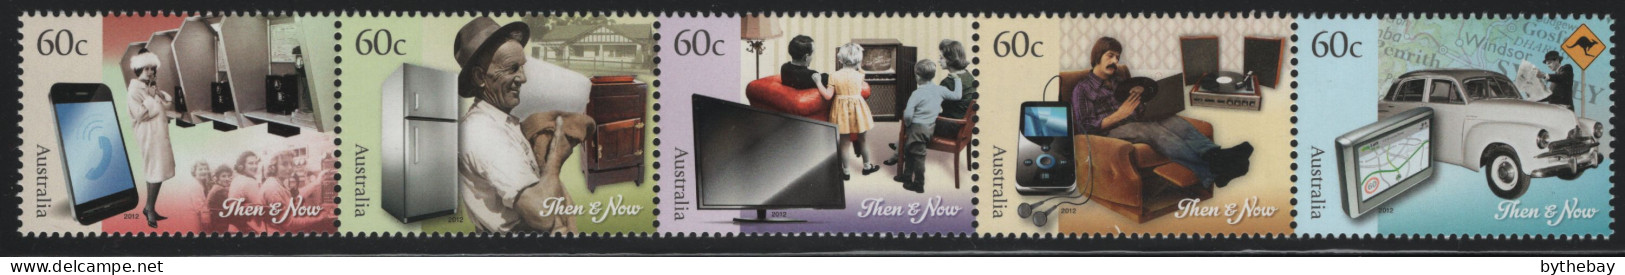 Australia 2012 MNH Sc 3646a 60c Telephone, Refrigerator, TV, Stereo, Maps Strip - Mint Stamps